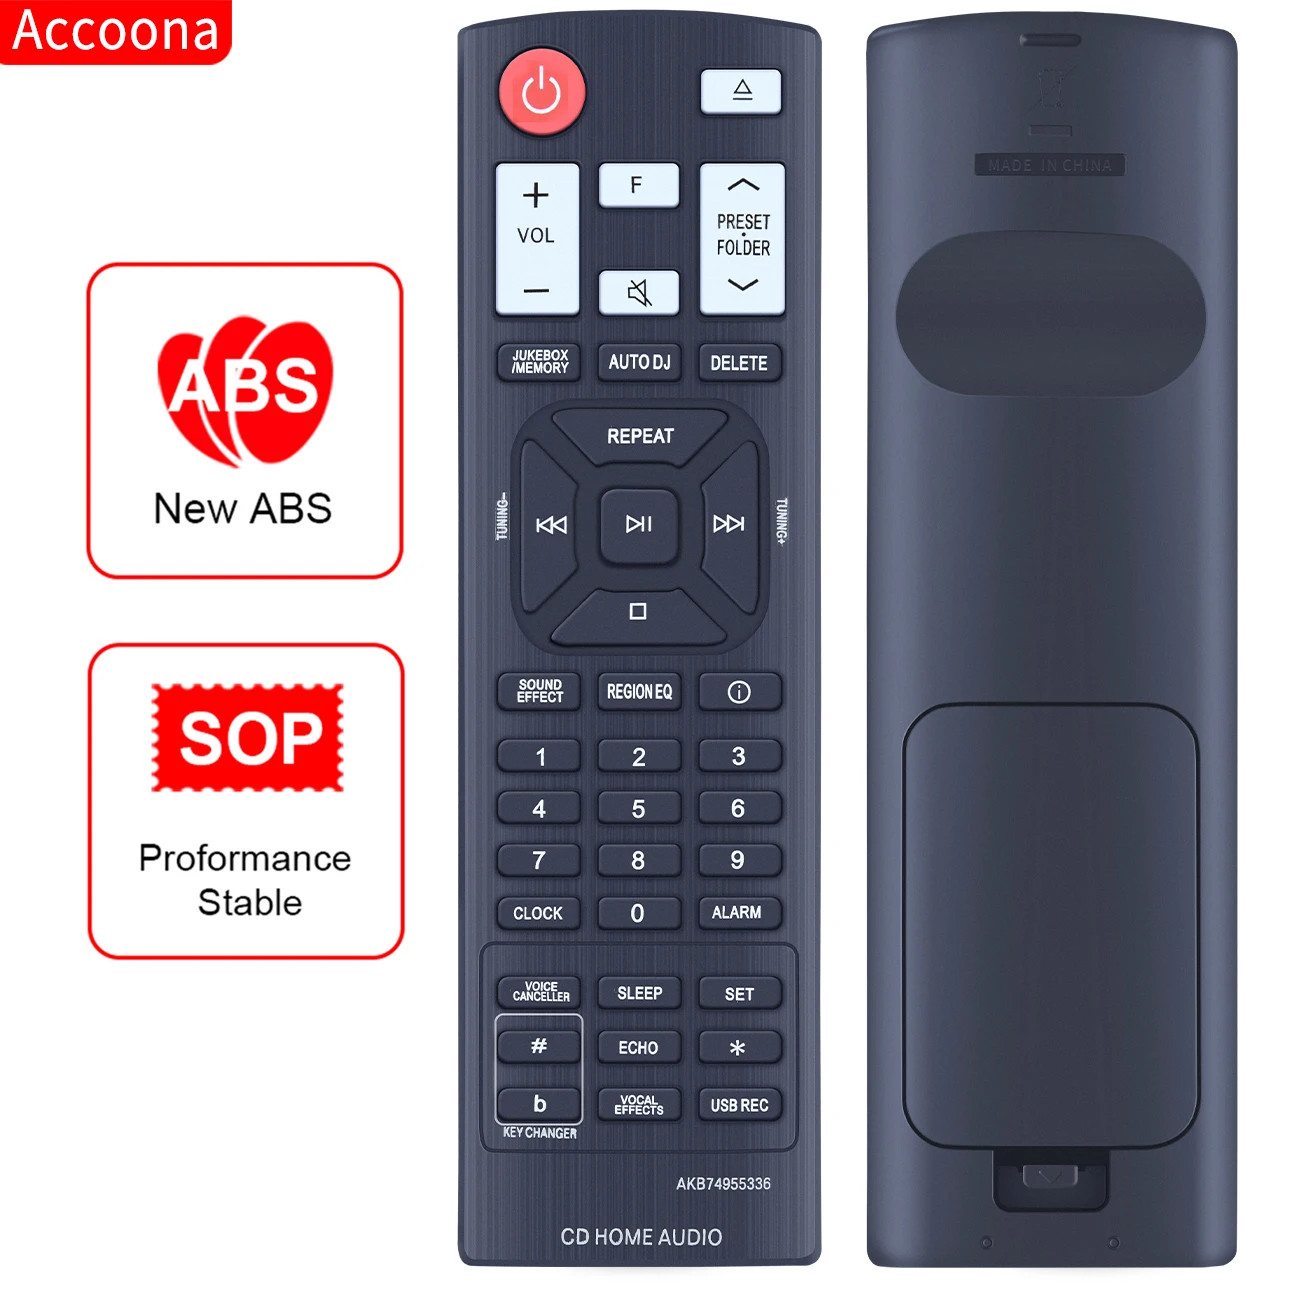 AKB74955336 שליטה מרחוק להחליף מיני Hi-Fi CD מערכת שמע ביתית